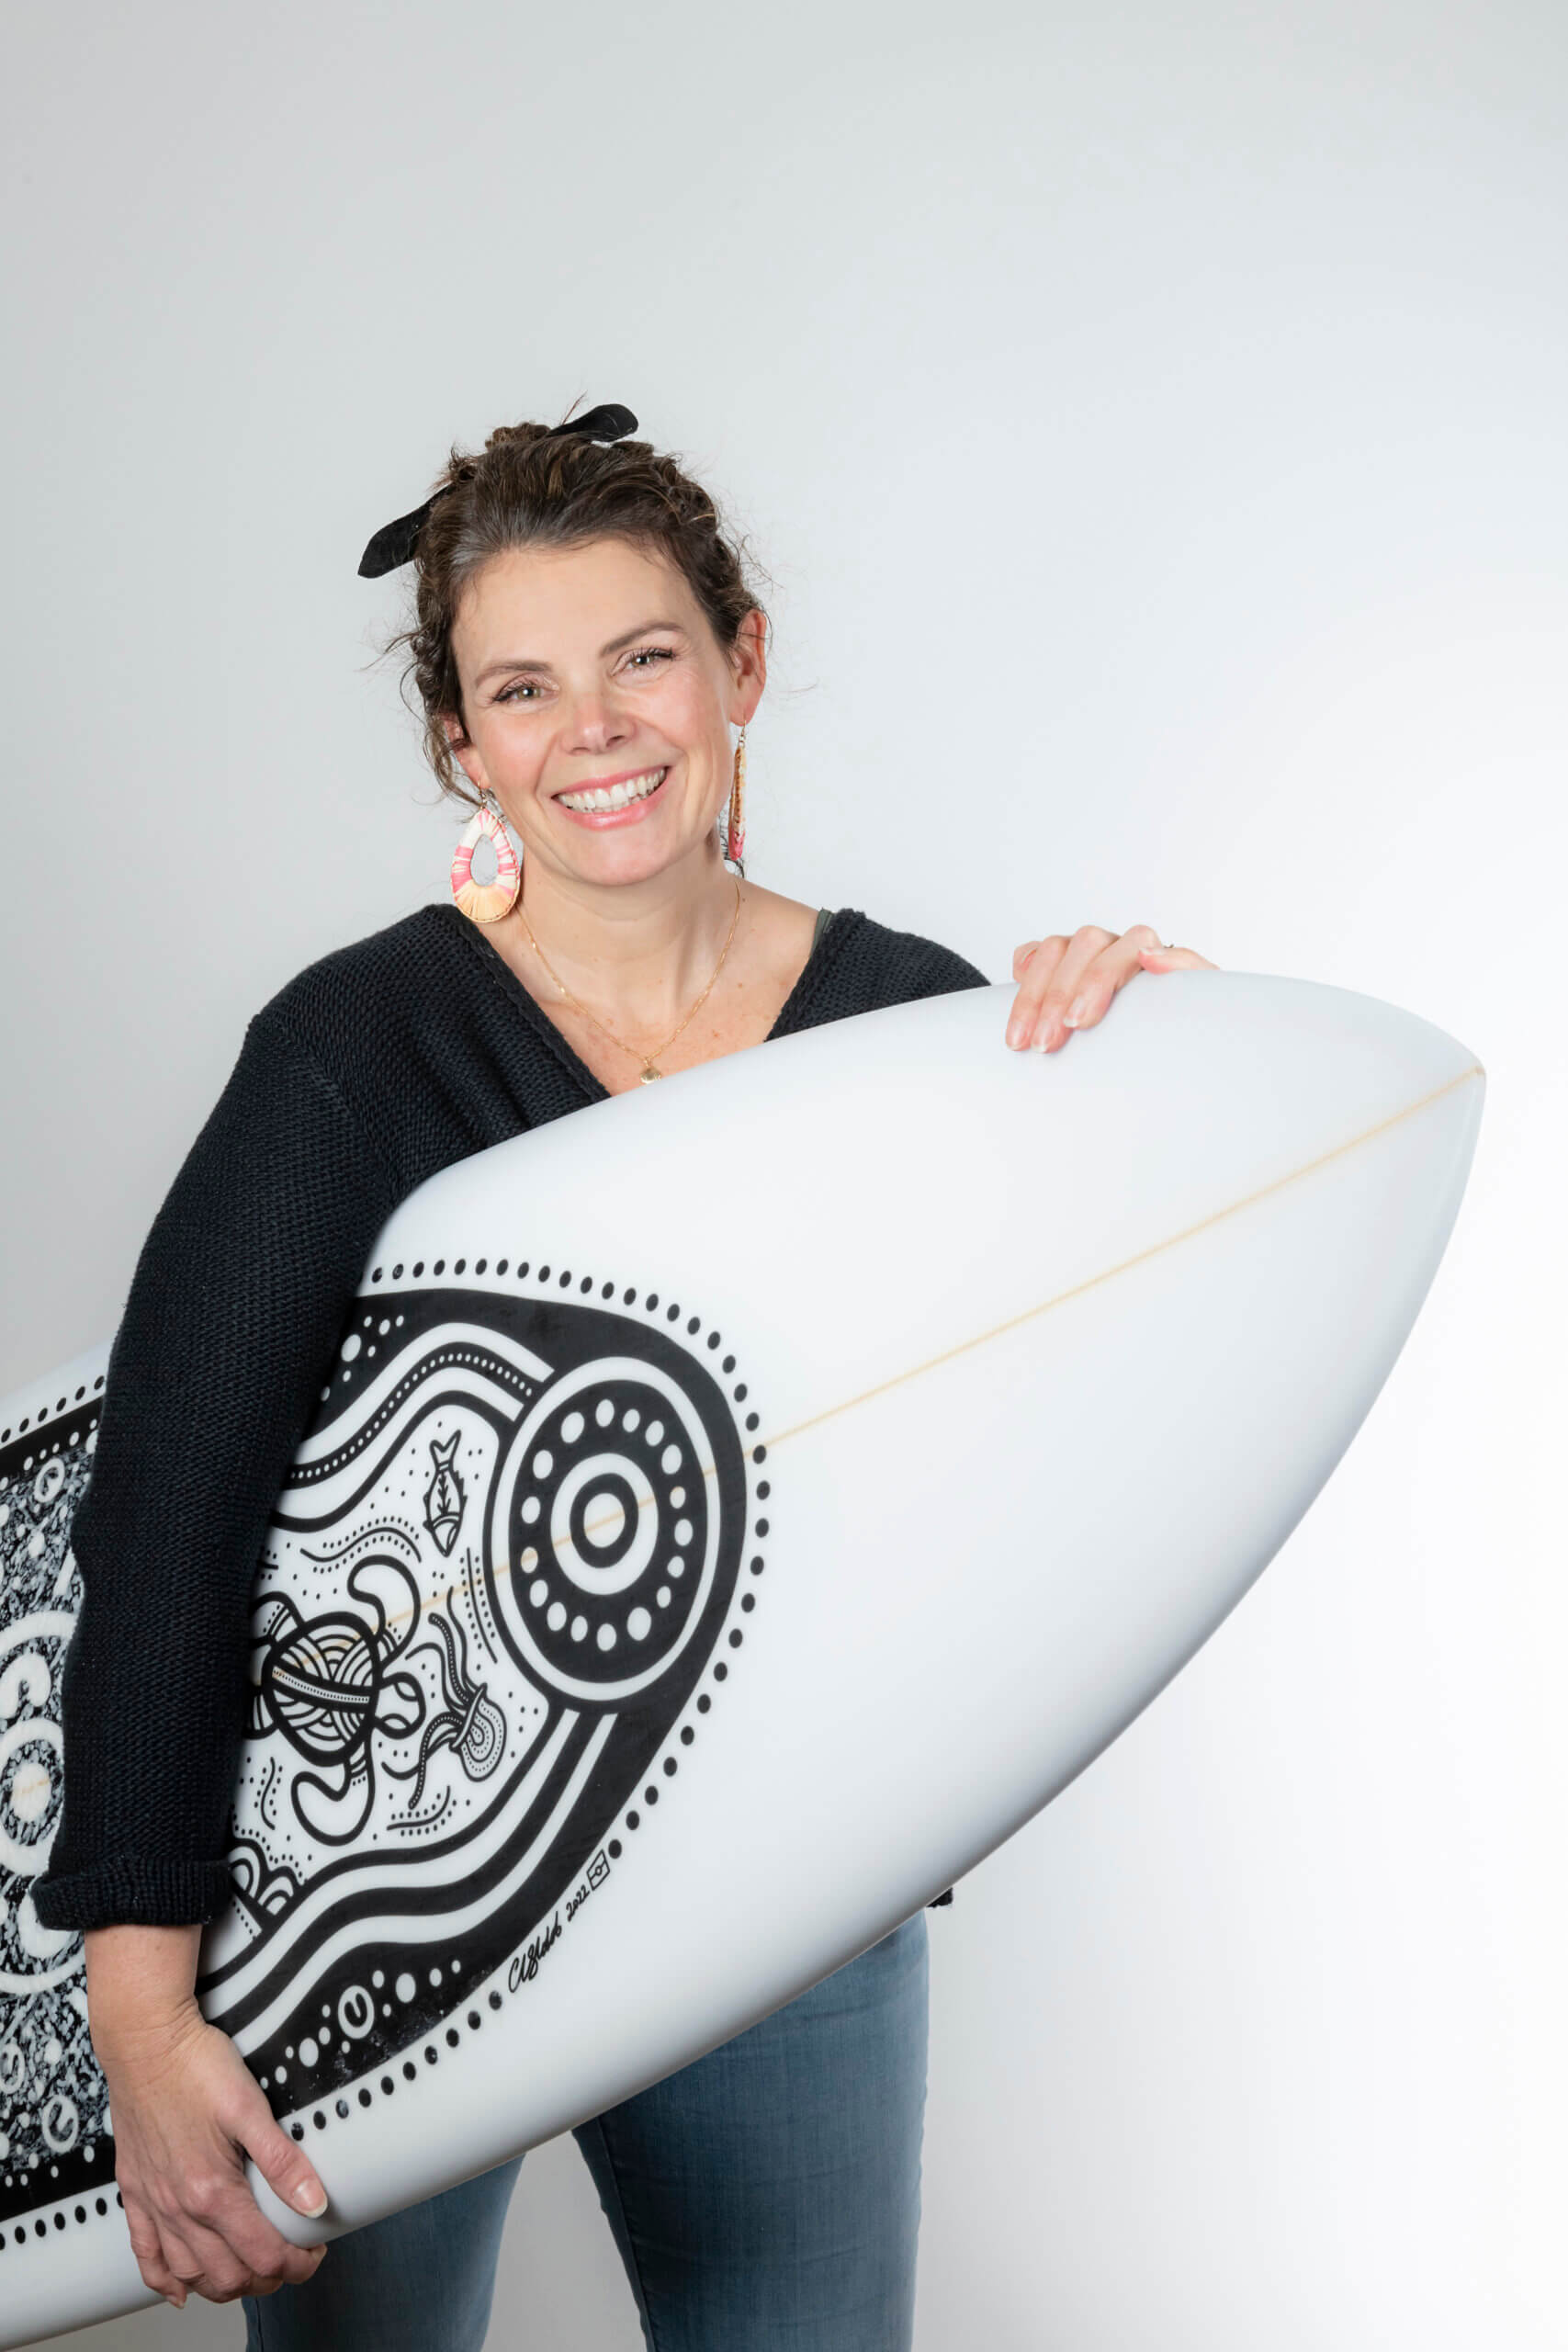 Kate Thompson holding surfboard